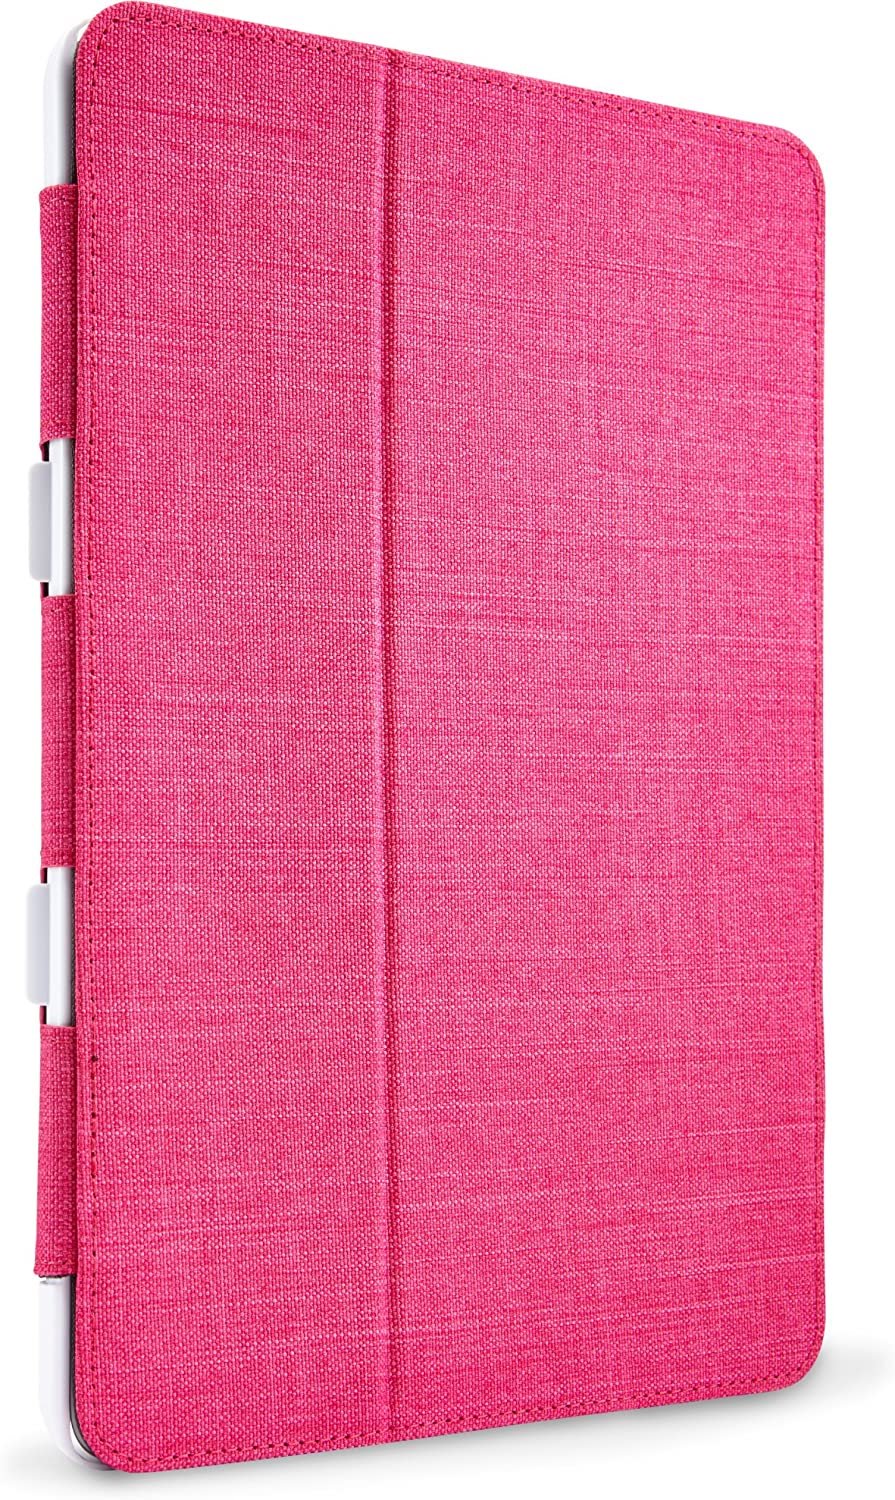 Case Logic Σκληρή Θήκη Flip Cover για iPad 5 FSI1095 Ροζ